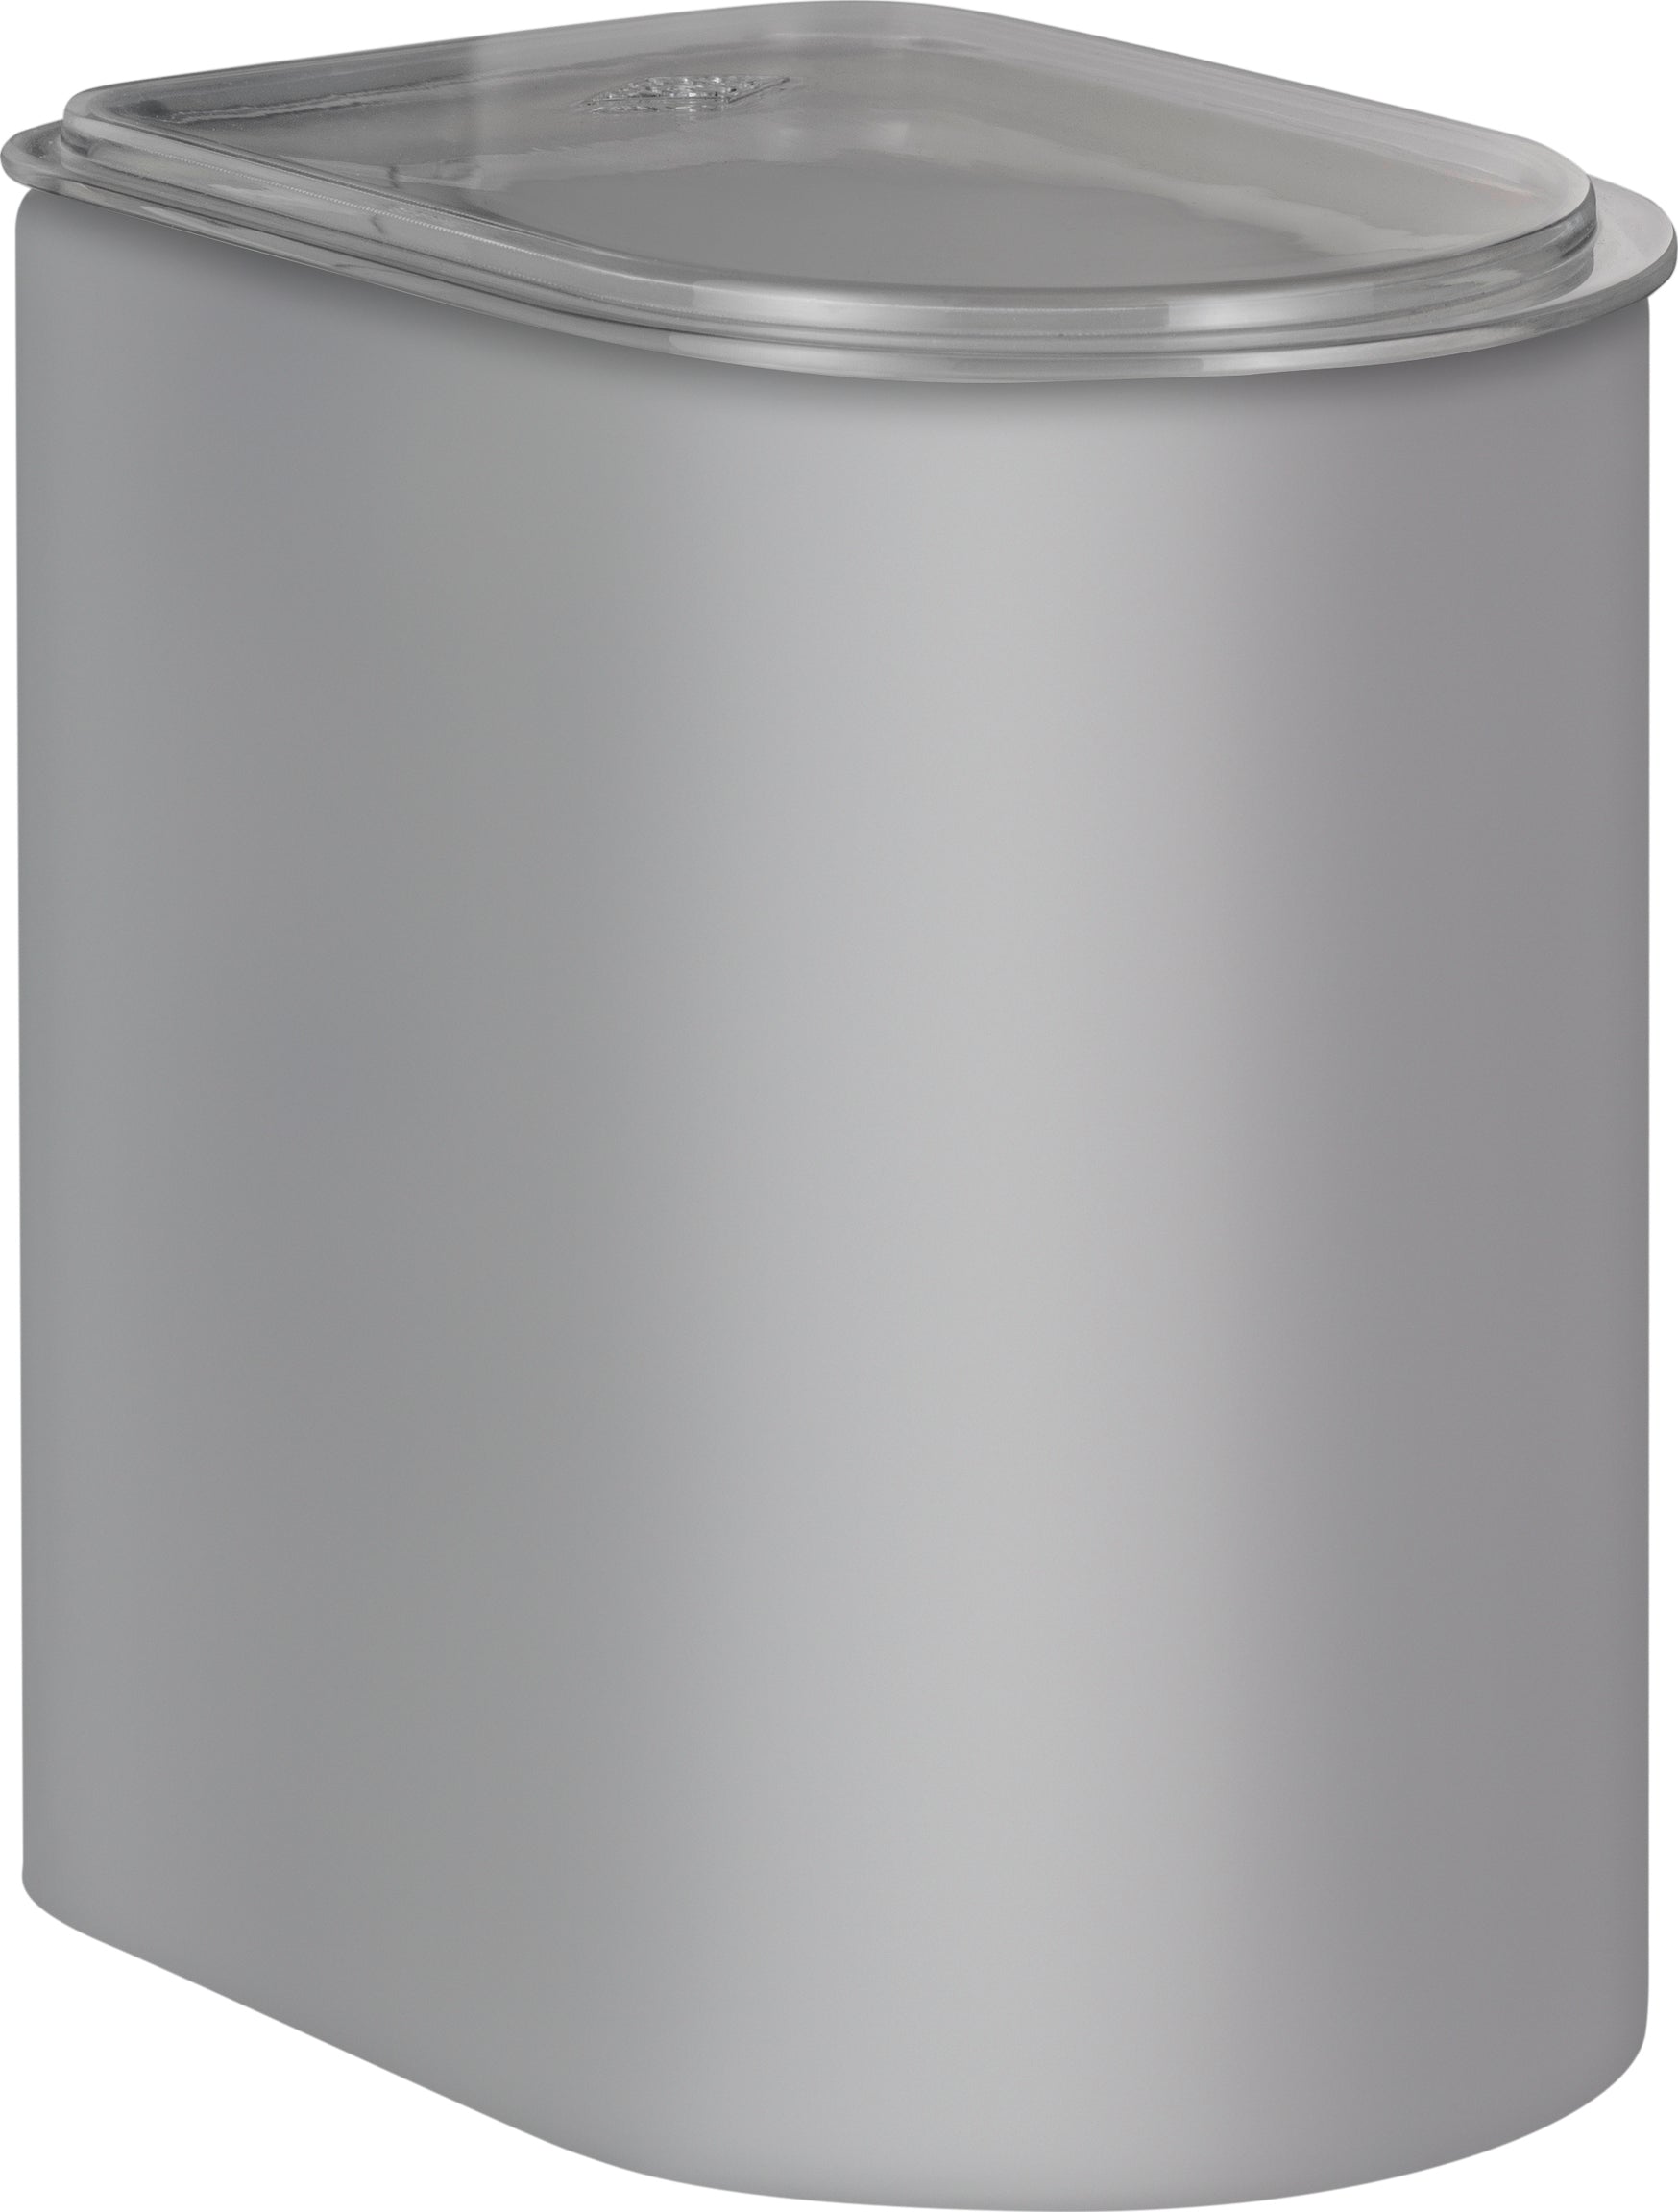 Wesco Dåse 2,2 liter med akryl låg, kølig grå mat